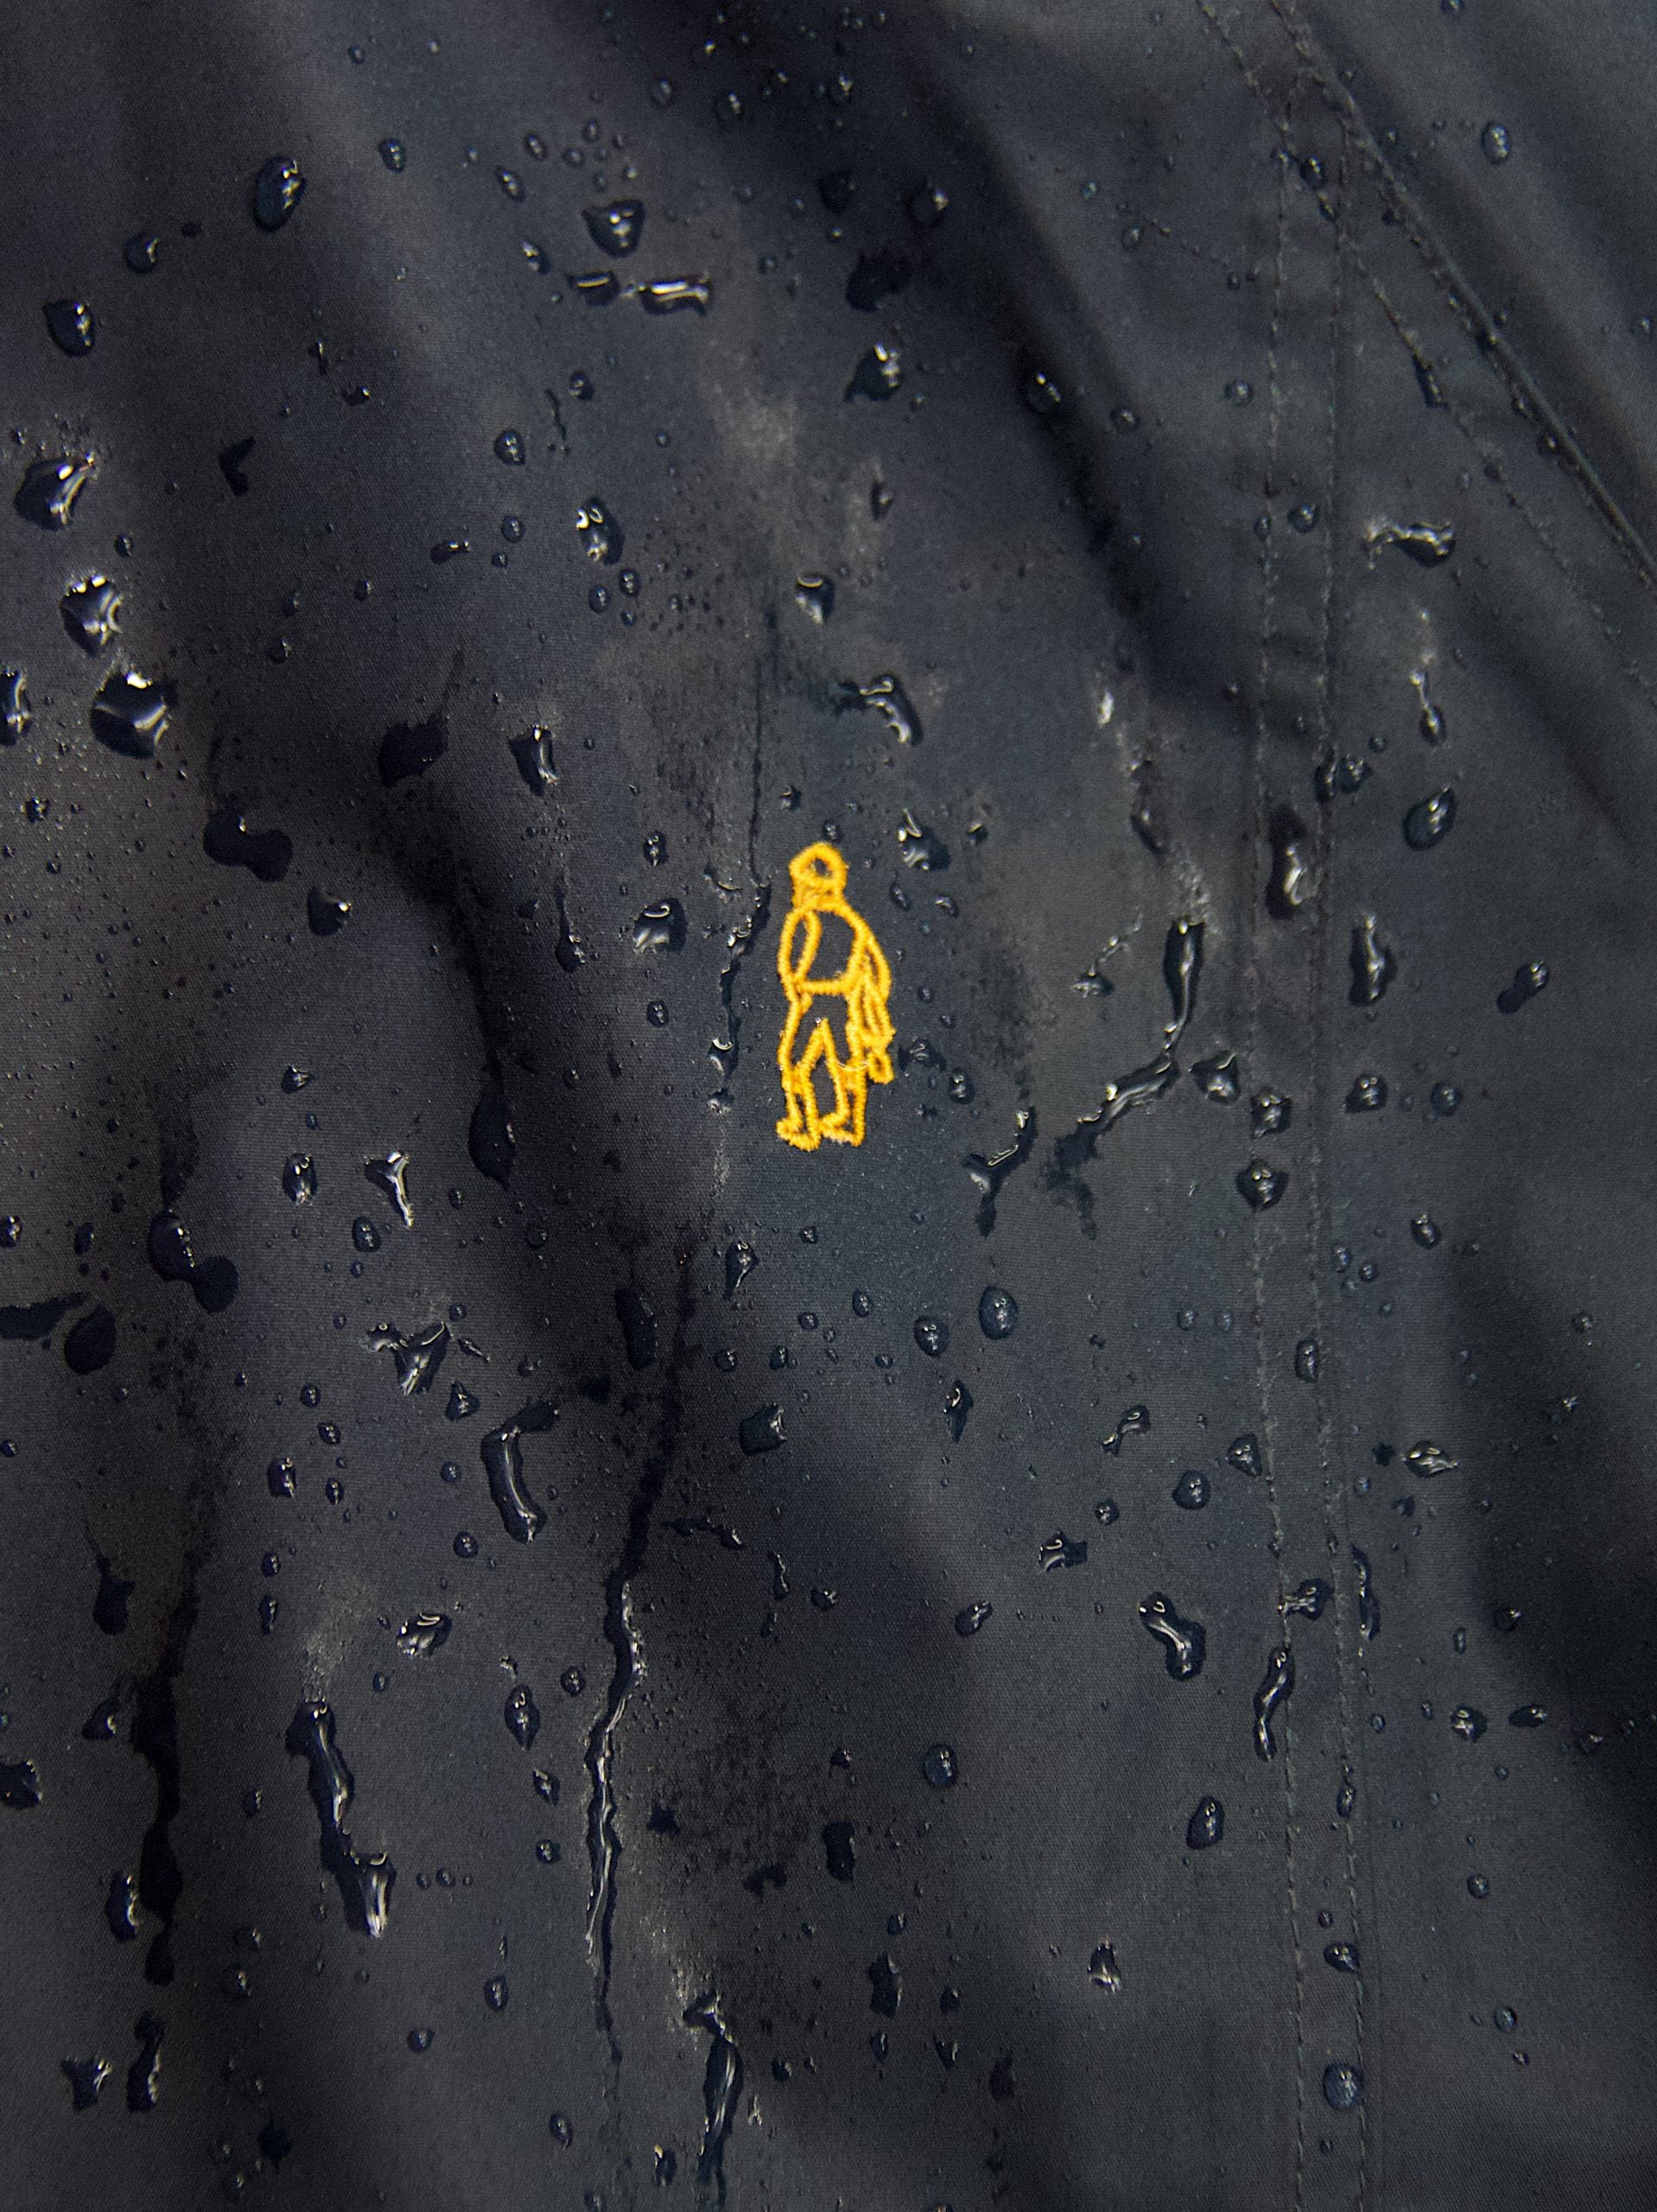 Lisa Lightweight Waterproof Jacket - Navy